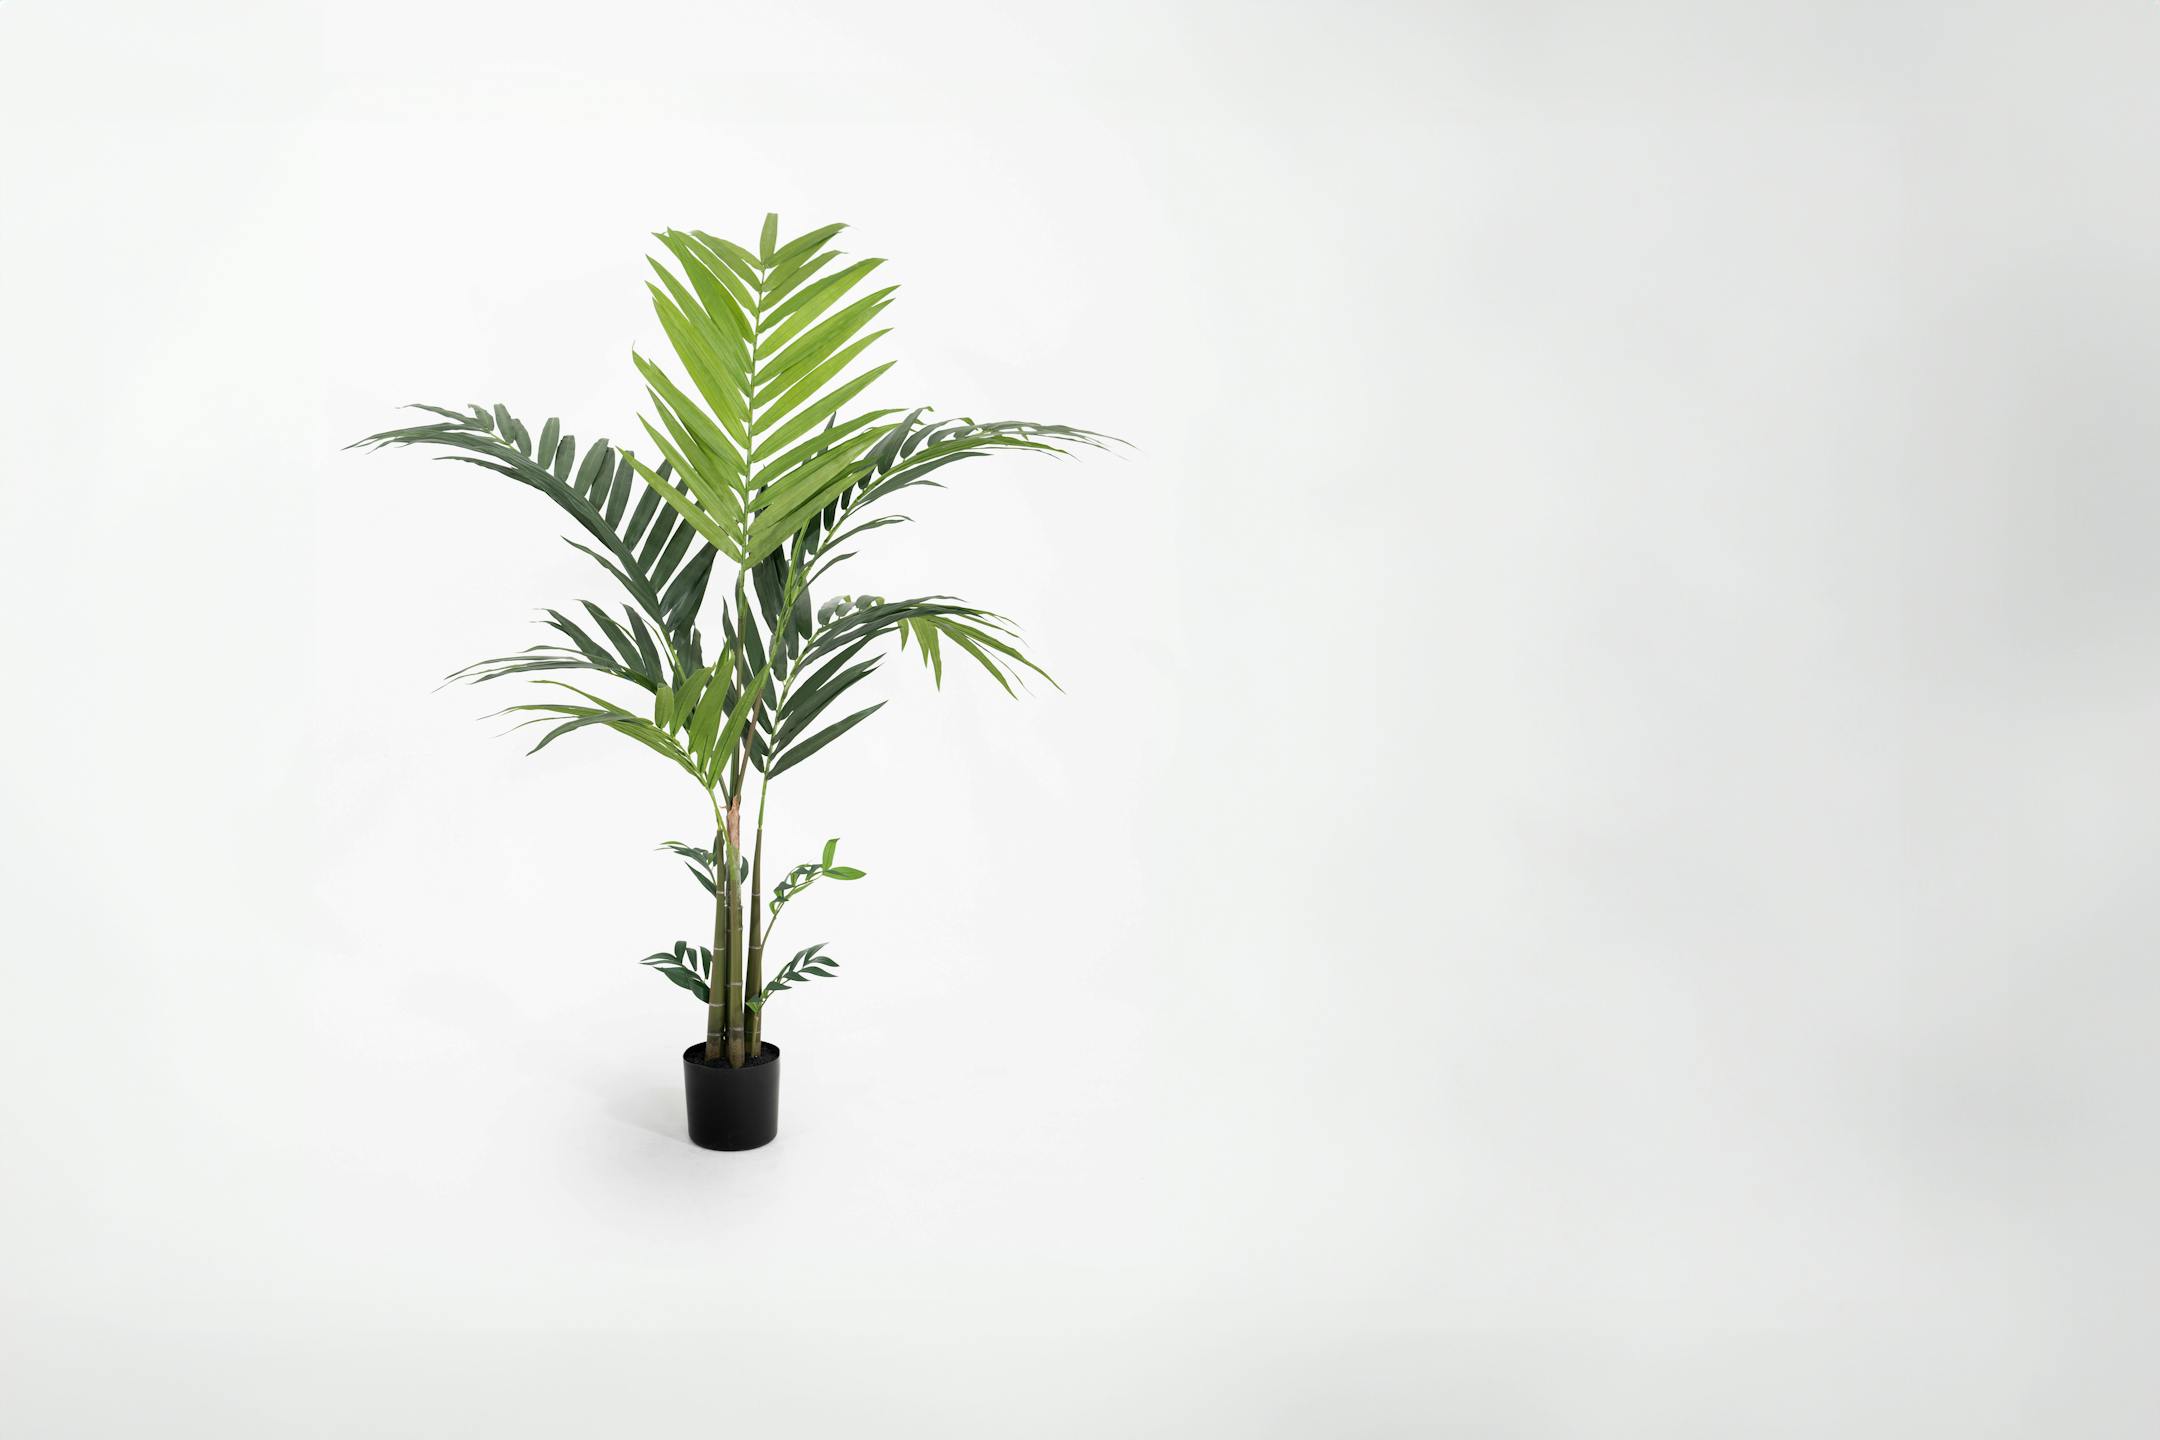 Small artificial kentia palm tree